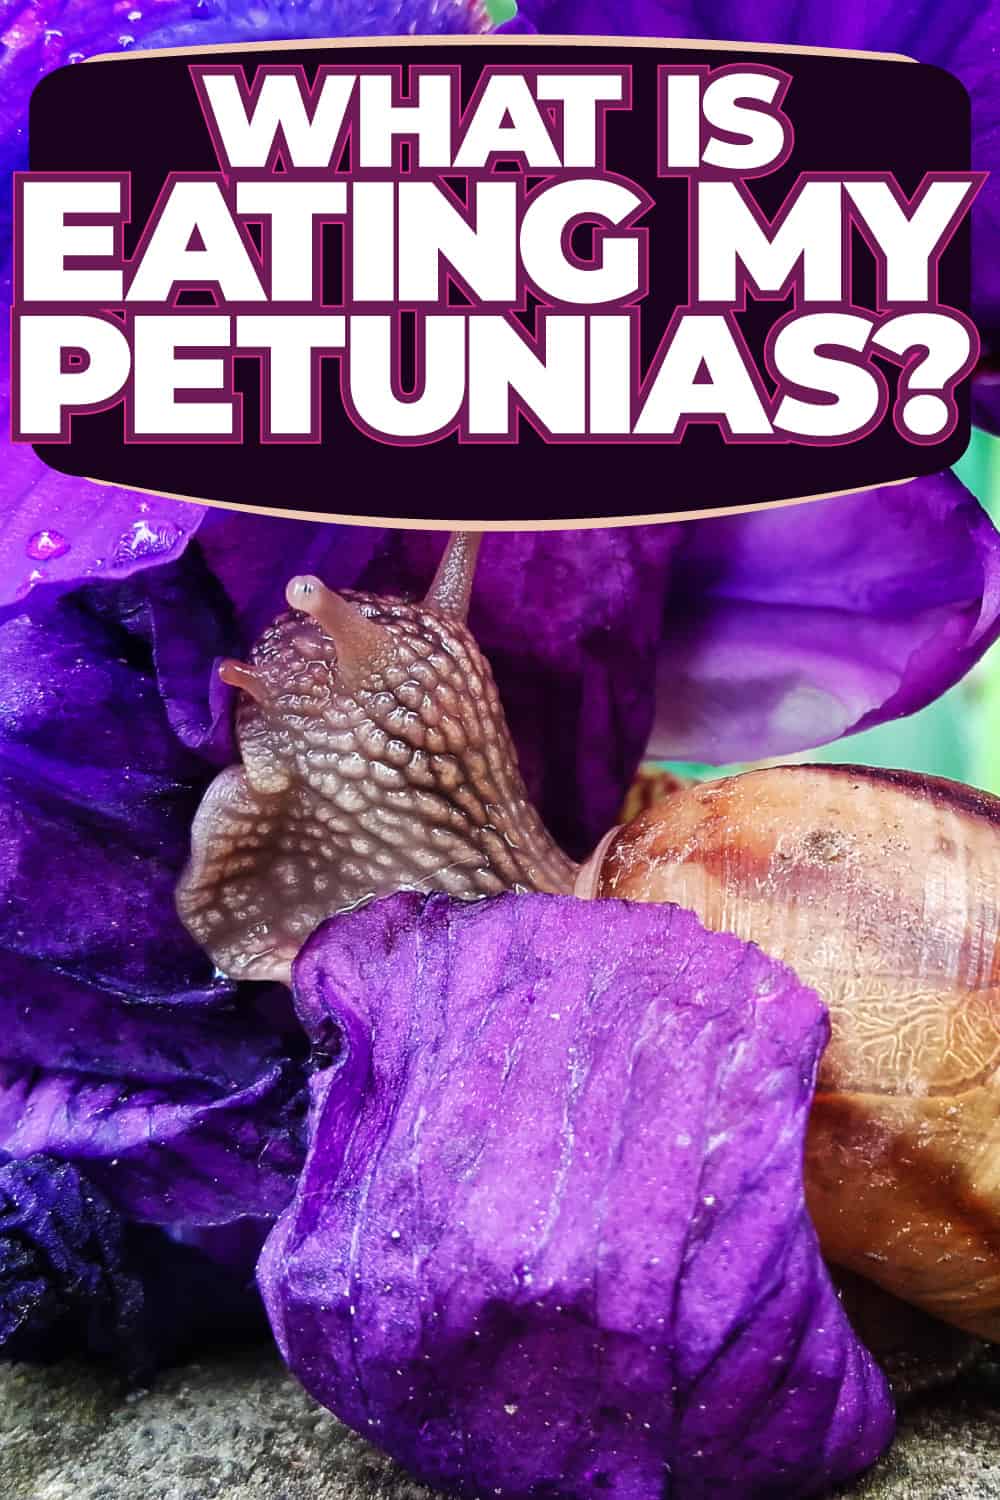 What Is Eating My Petunias?